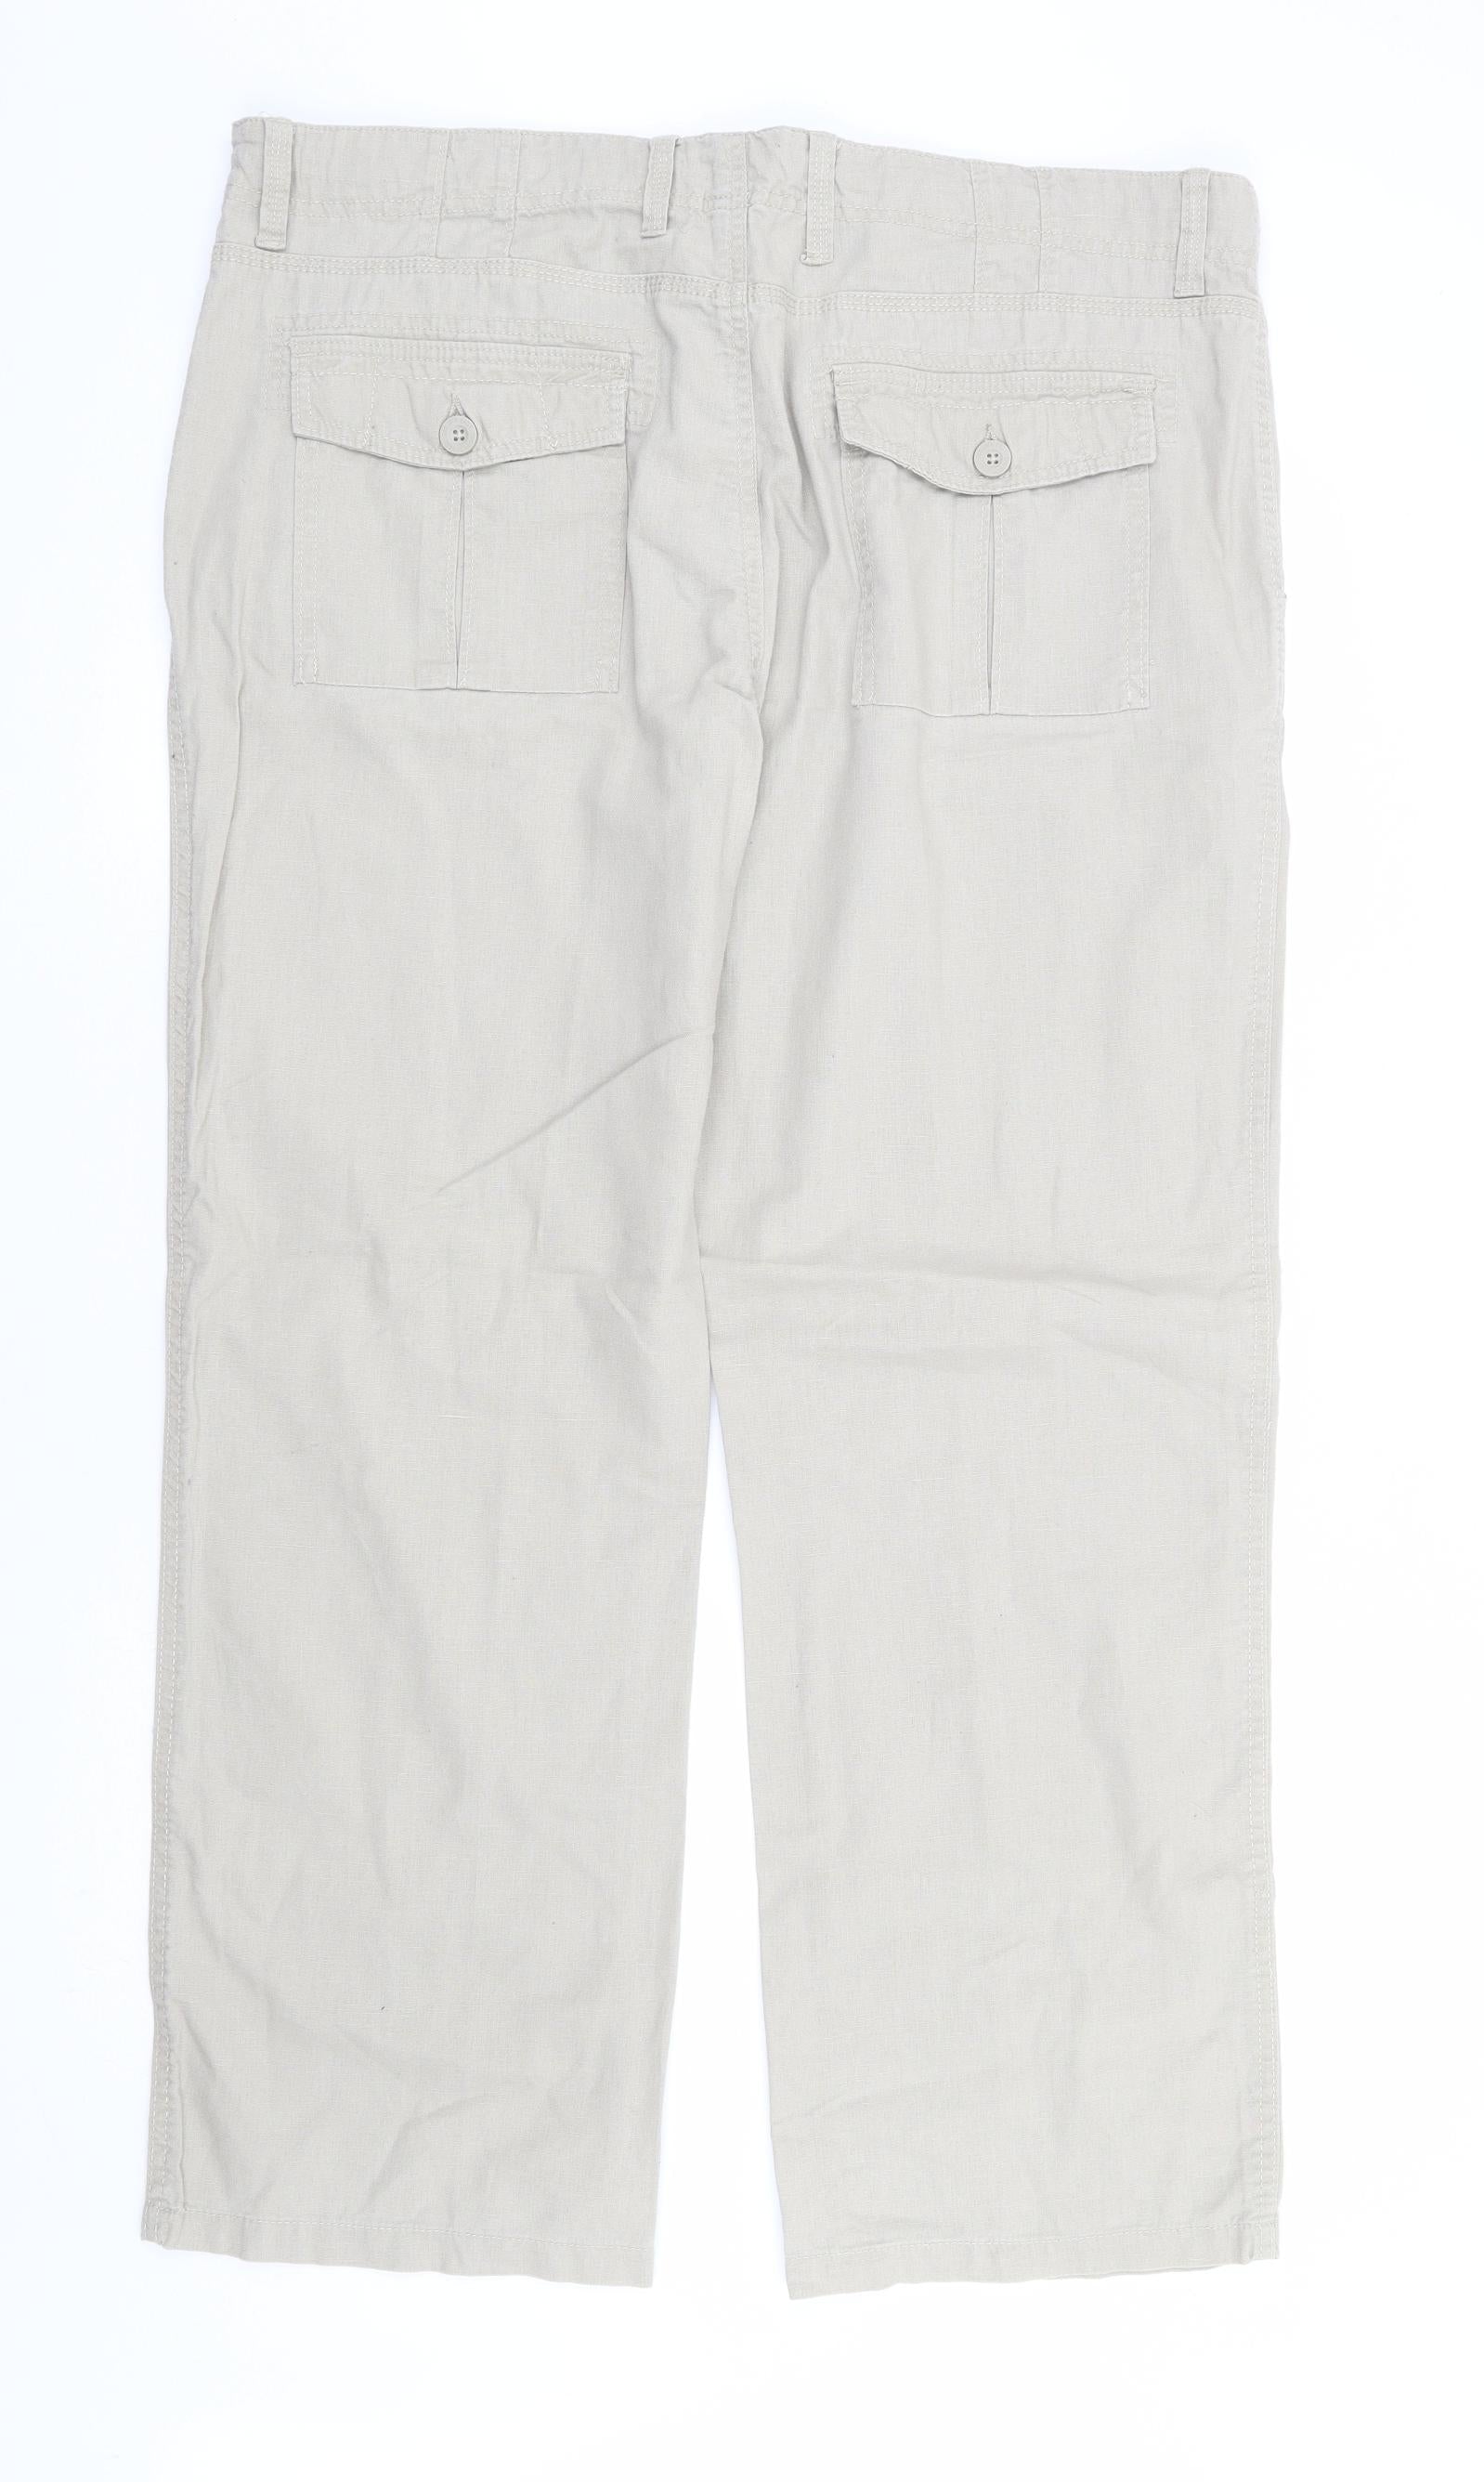 Matalan white crop trousers - Vinted